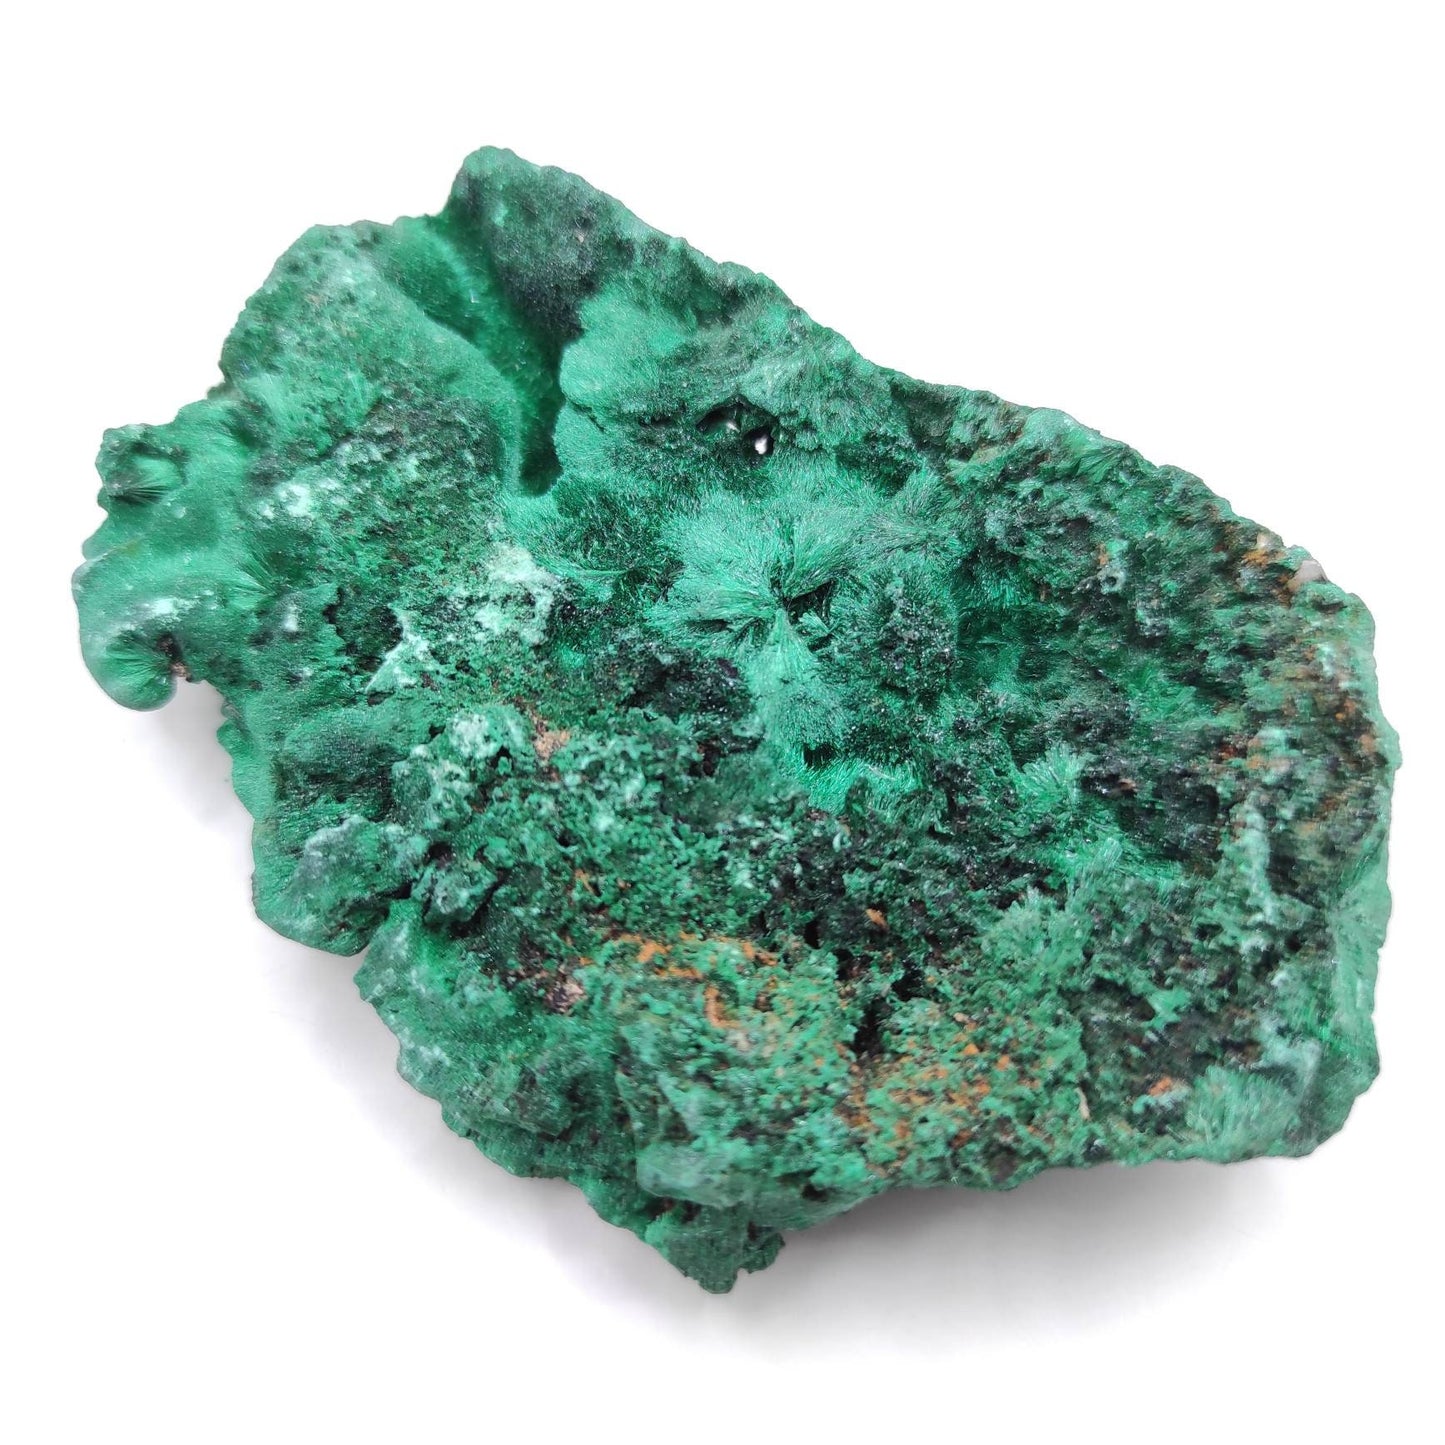 142g Fibrous Malachite - Velvet Malachite from Hubei, China - Natural Malachite Specimen - Raw Minerals - Natural Velvety Malachite Crystal